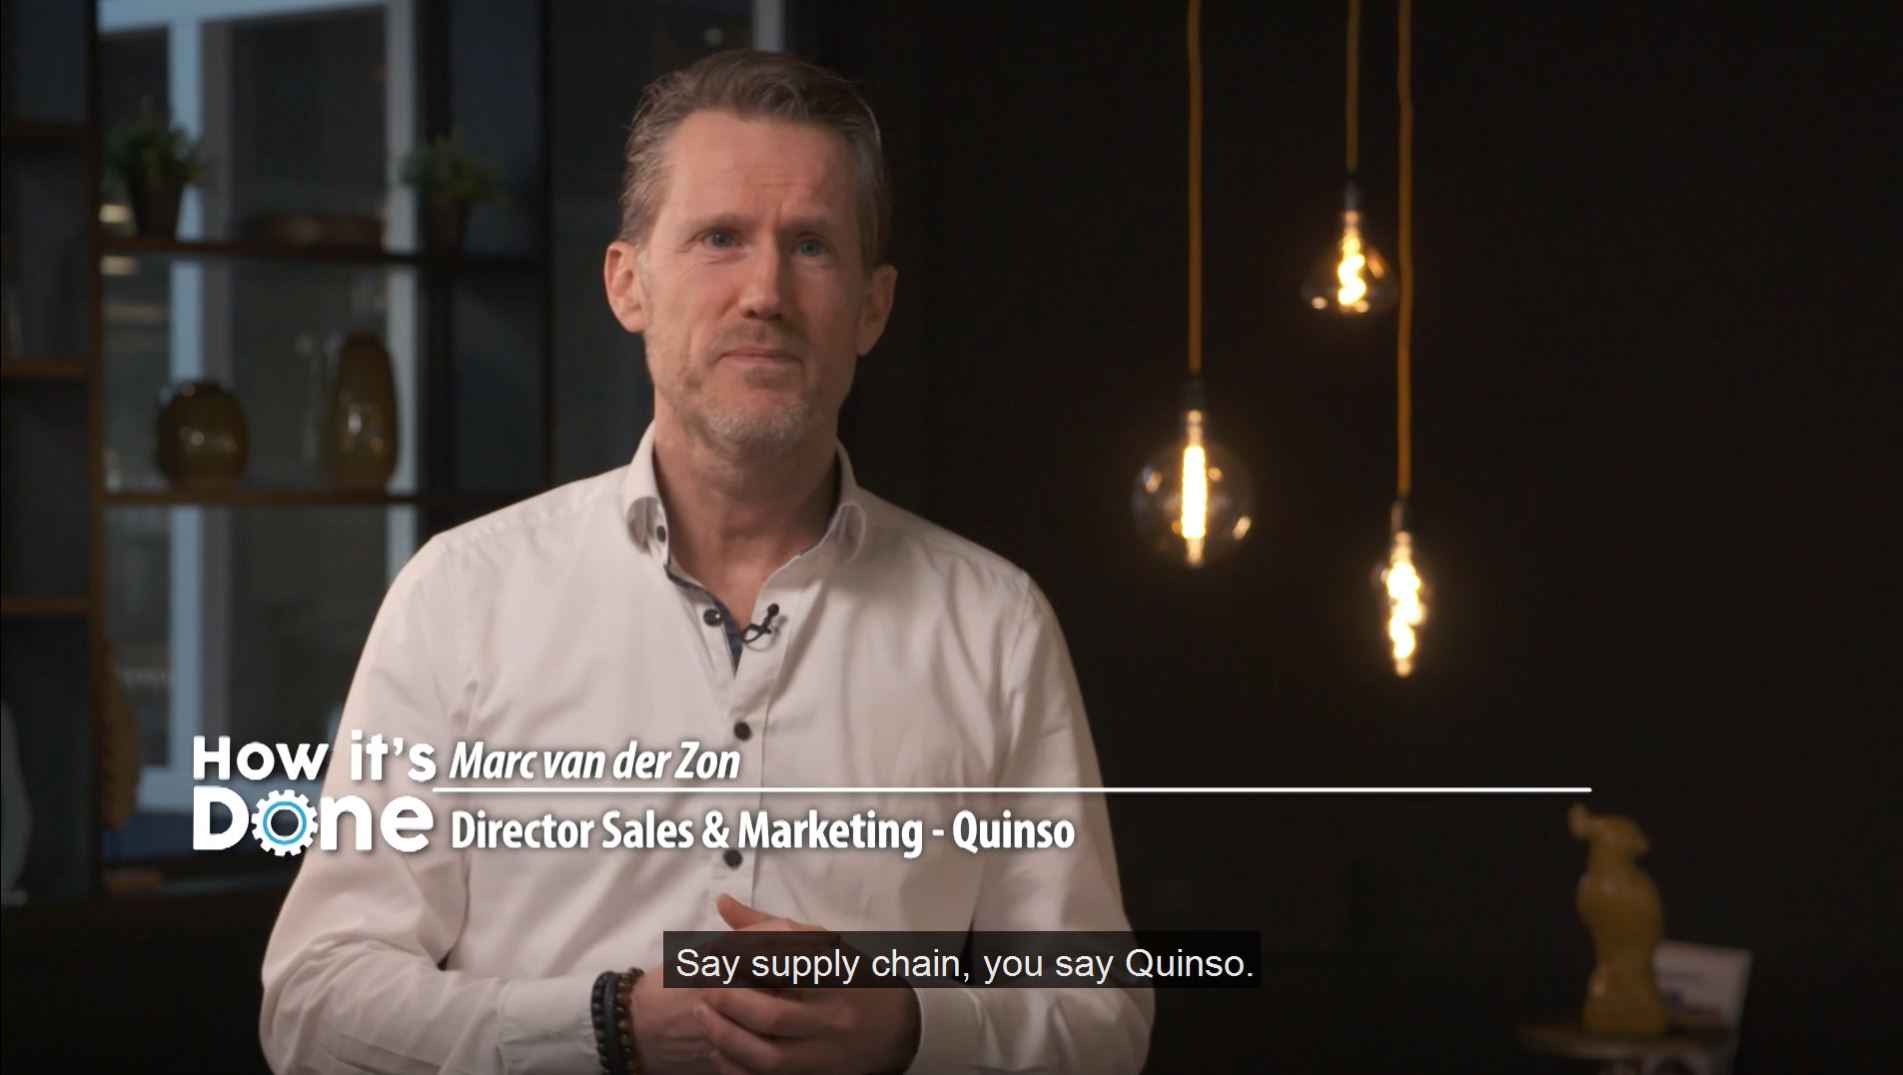 Zeg je supply chain, dan zeg je Quinso